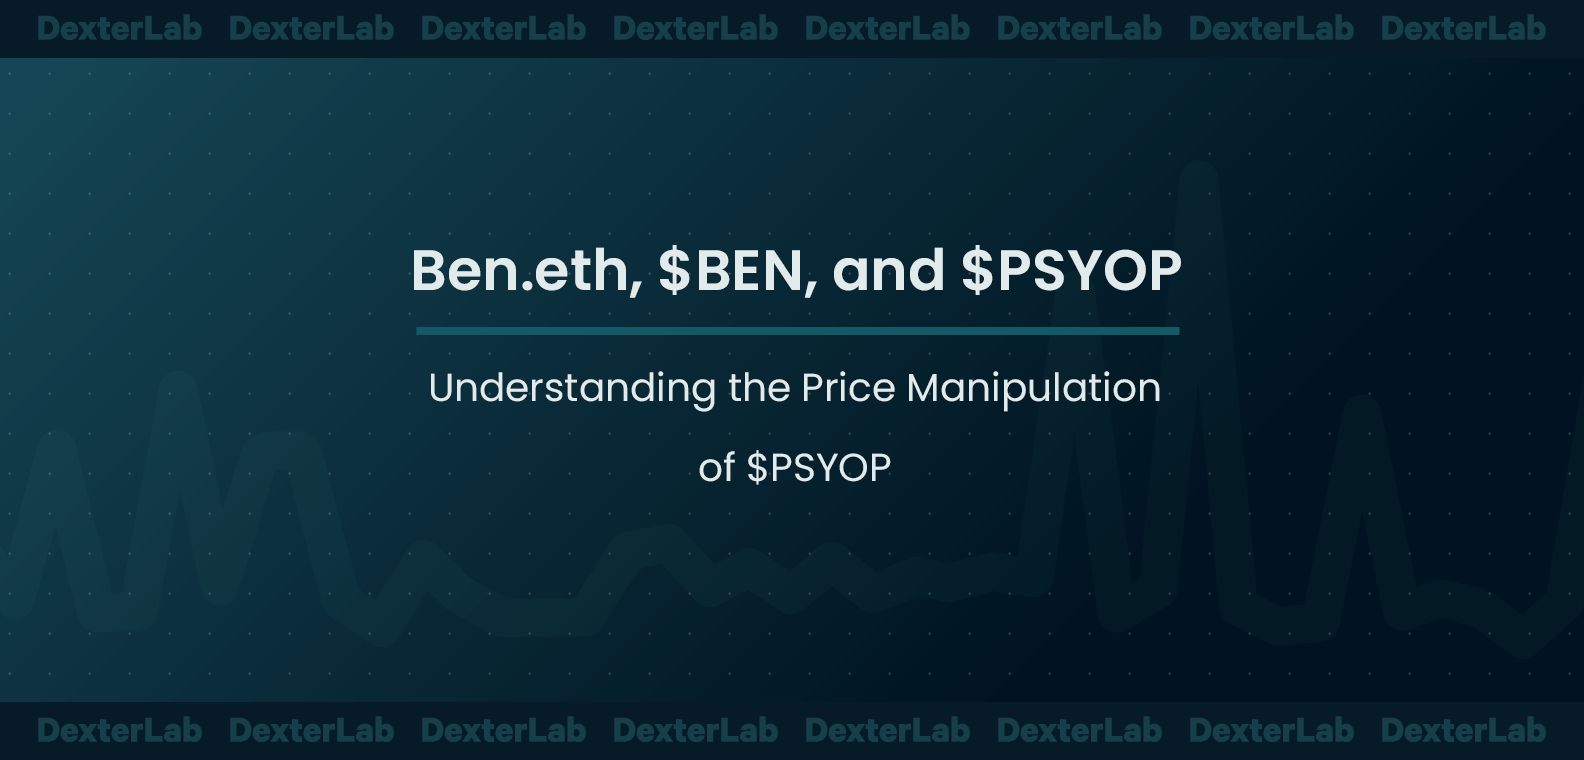 Ben.eth, $BEN, and $PSYOP: Understanding the Price Manipulation of $PSYOP